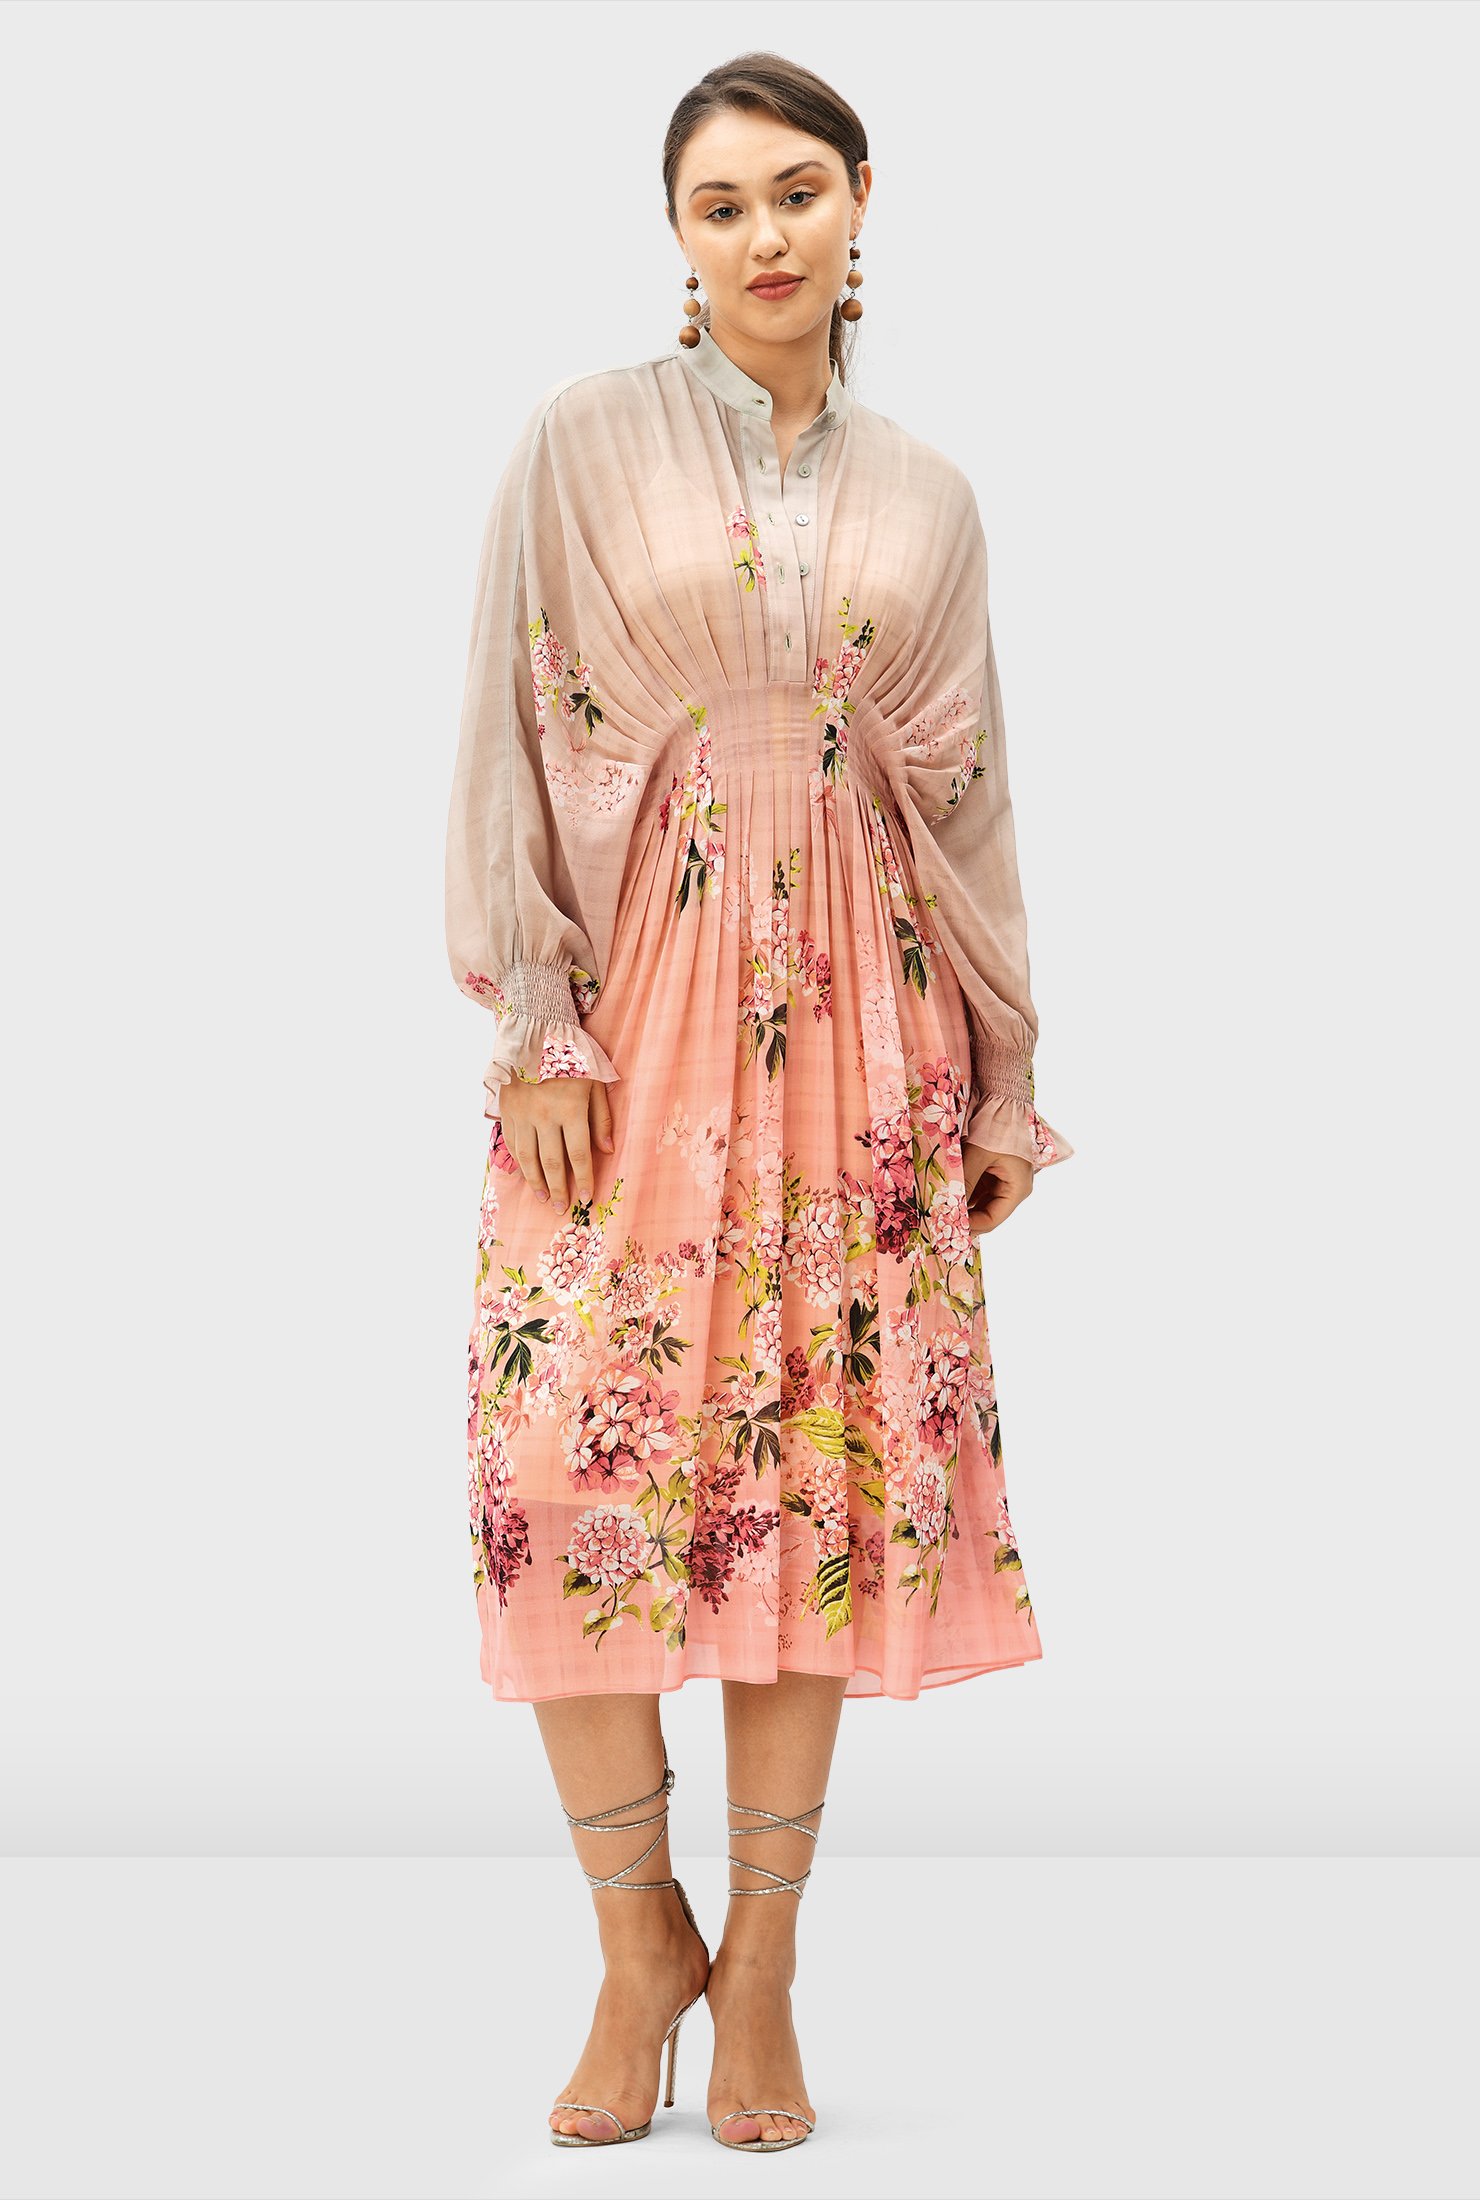 Ombre floral print georgette release pleat dress